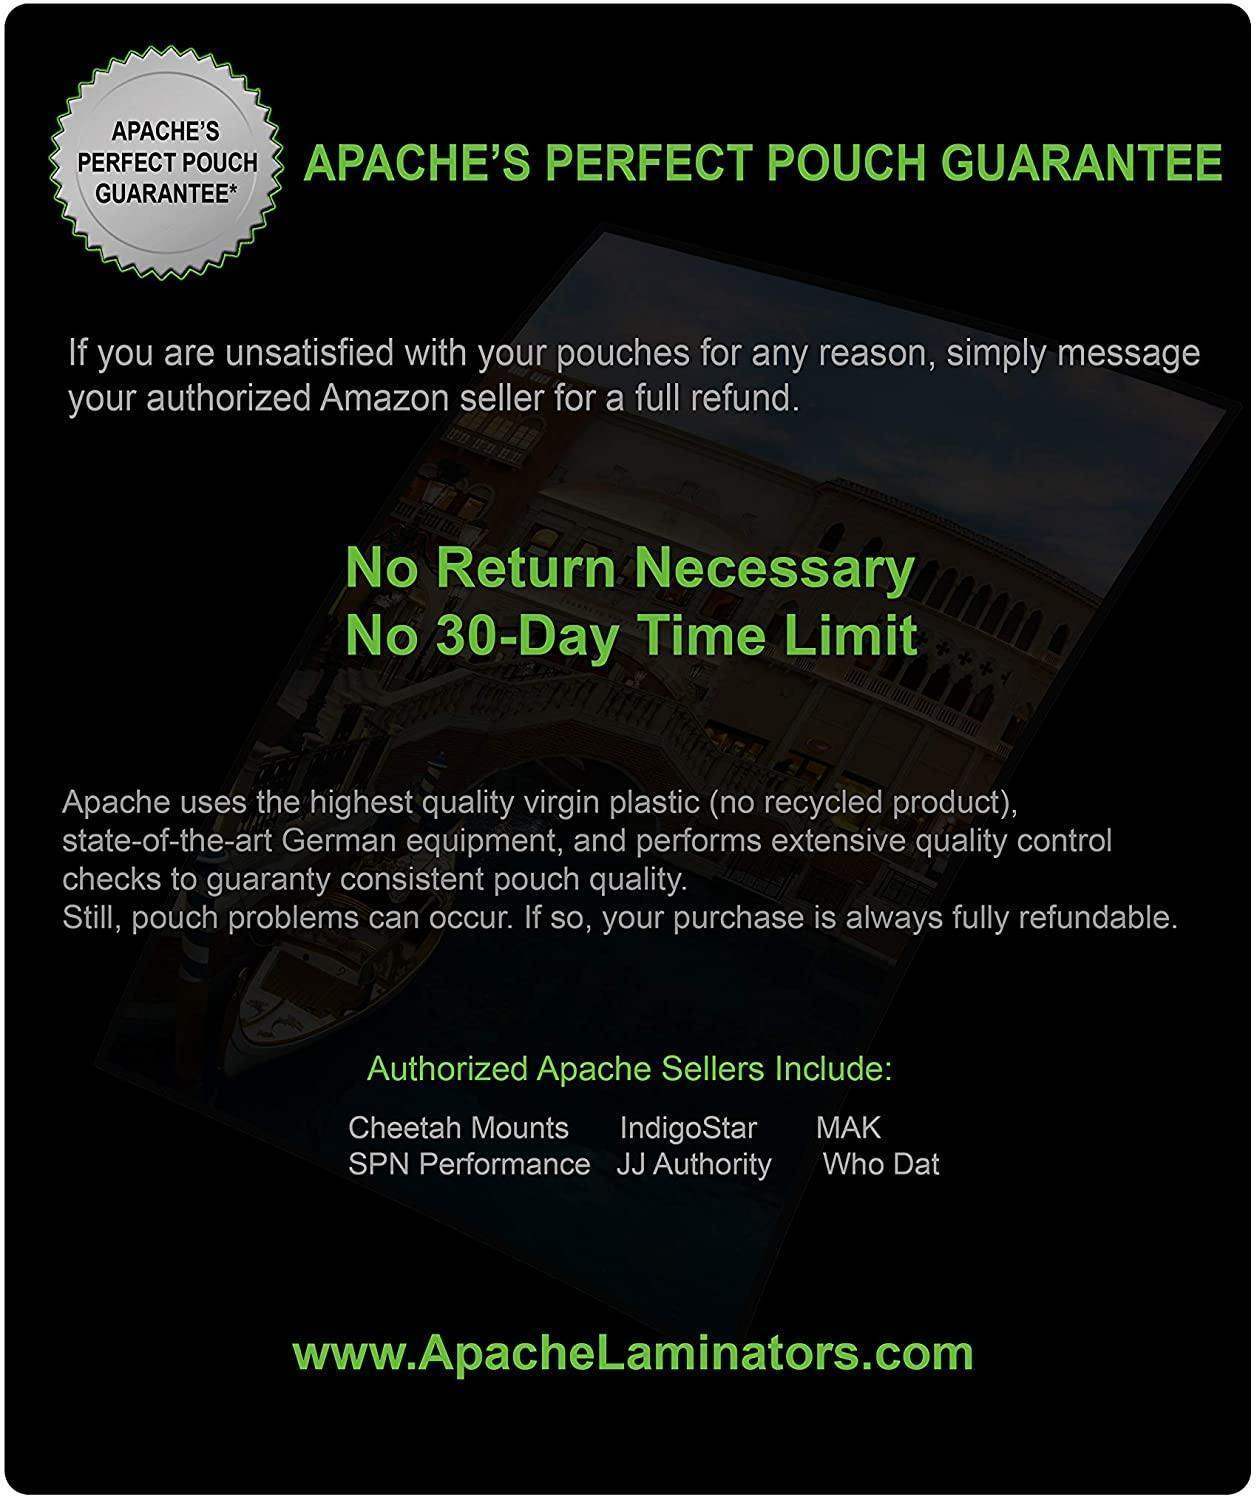 Apache Laminating Pouches, 3 mil, Legal Size, 20 Pack - Apache